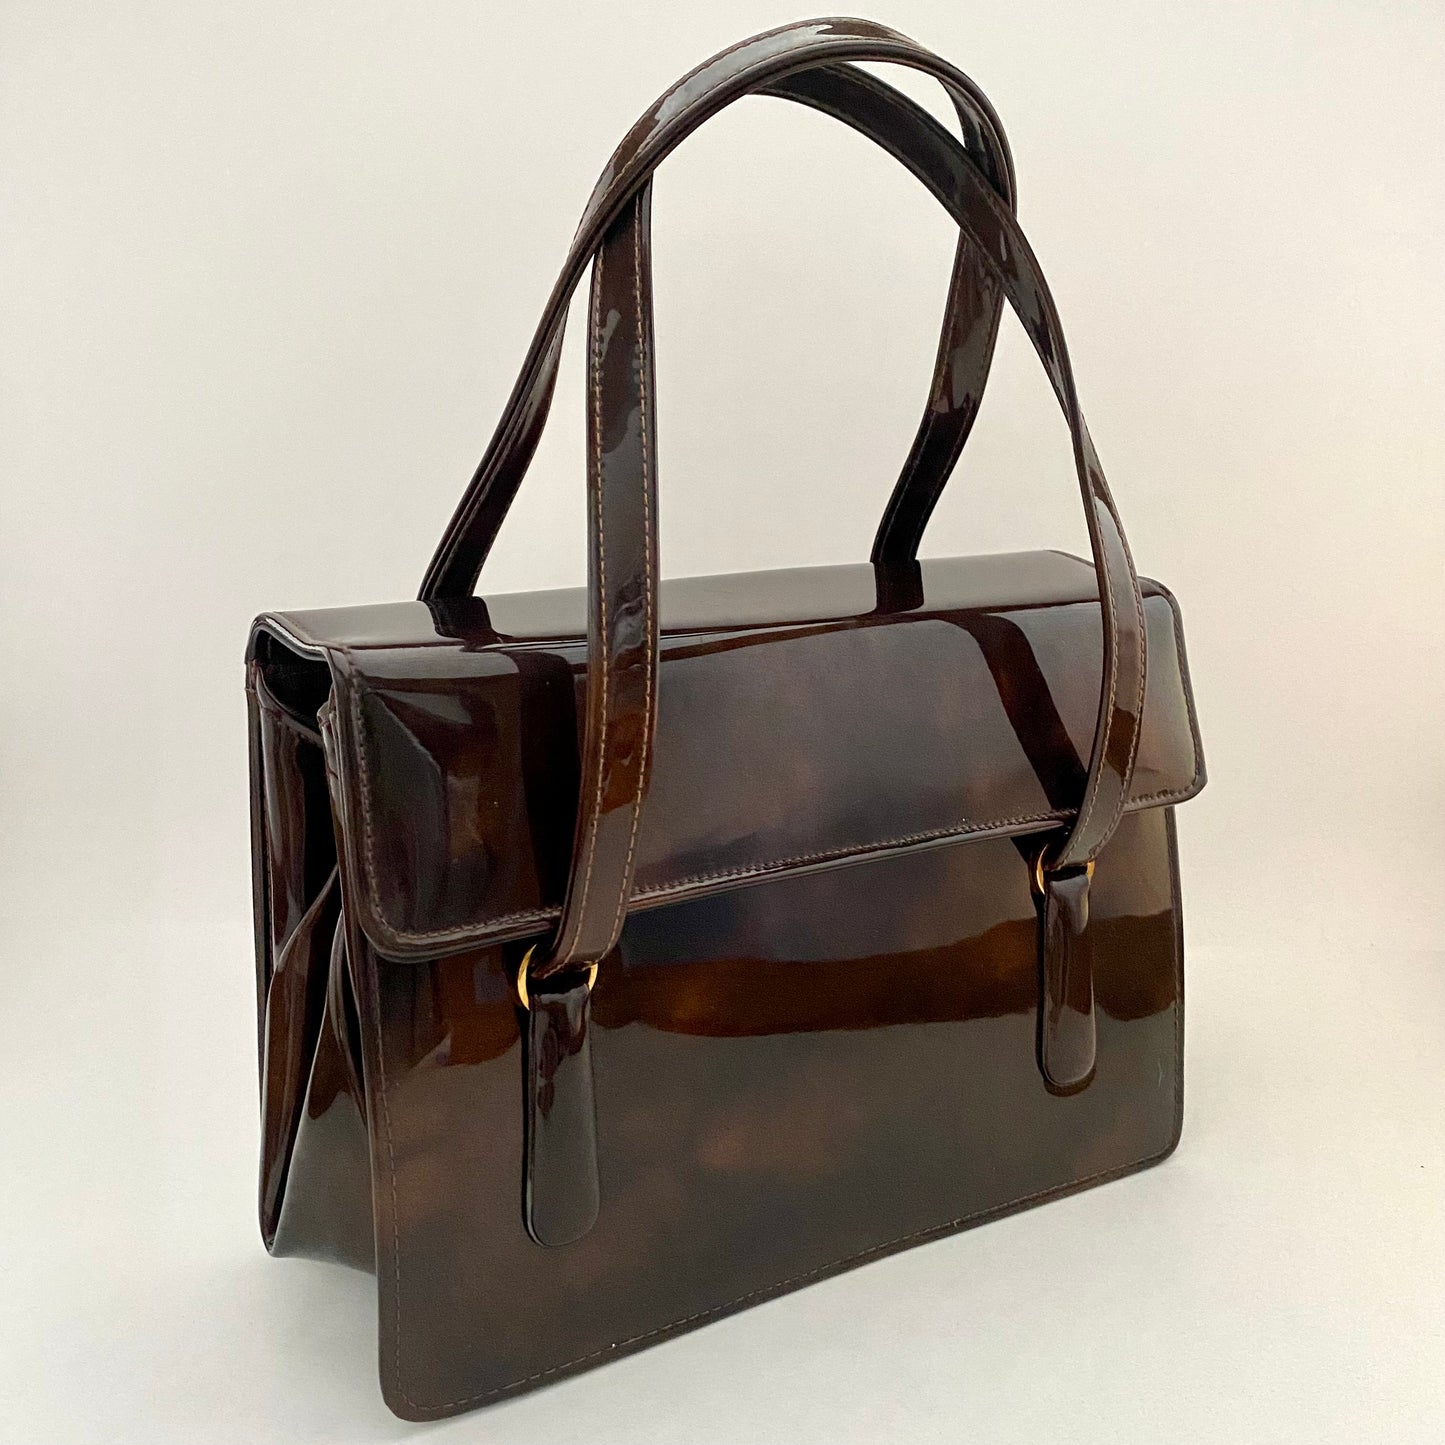 Empress Patent Leather Handbag